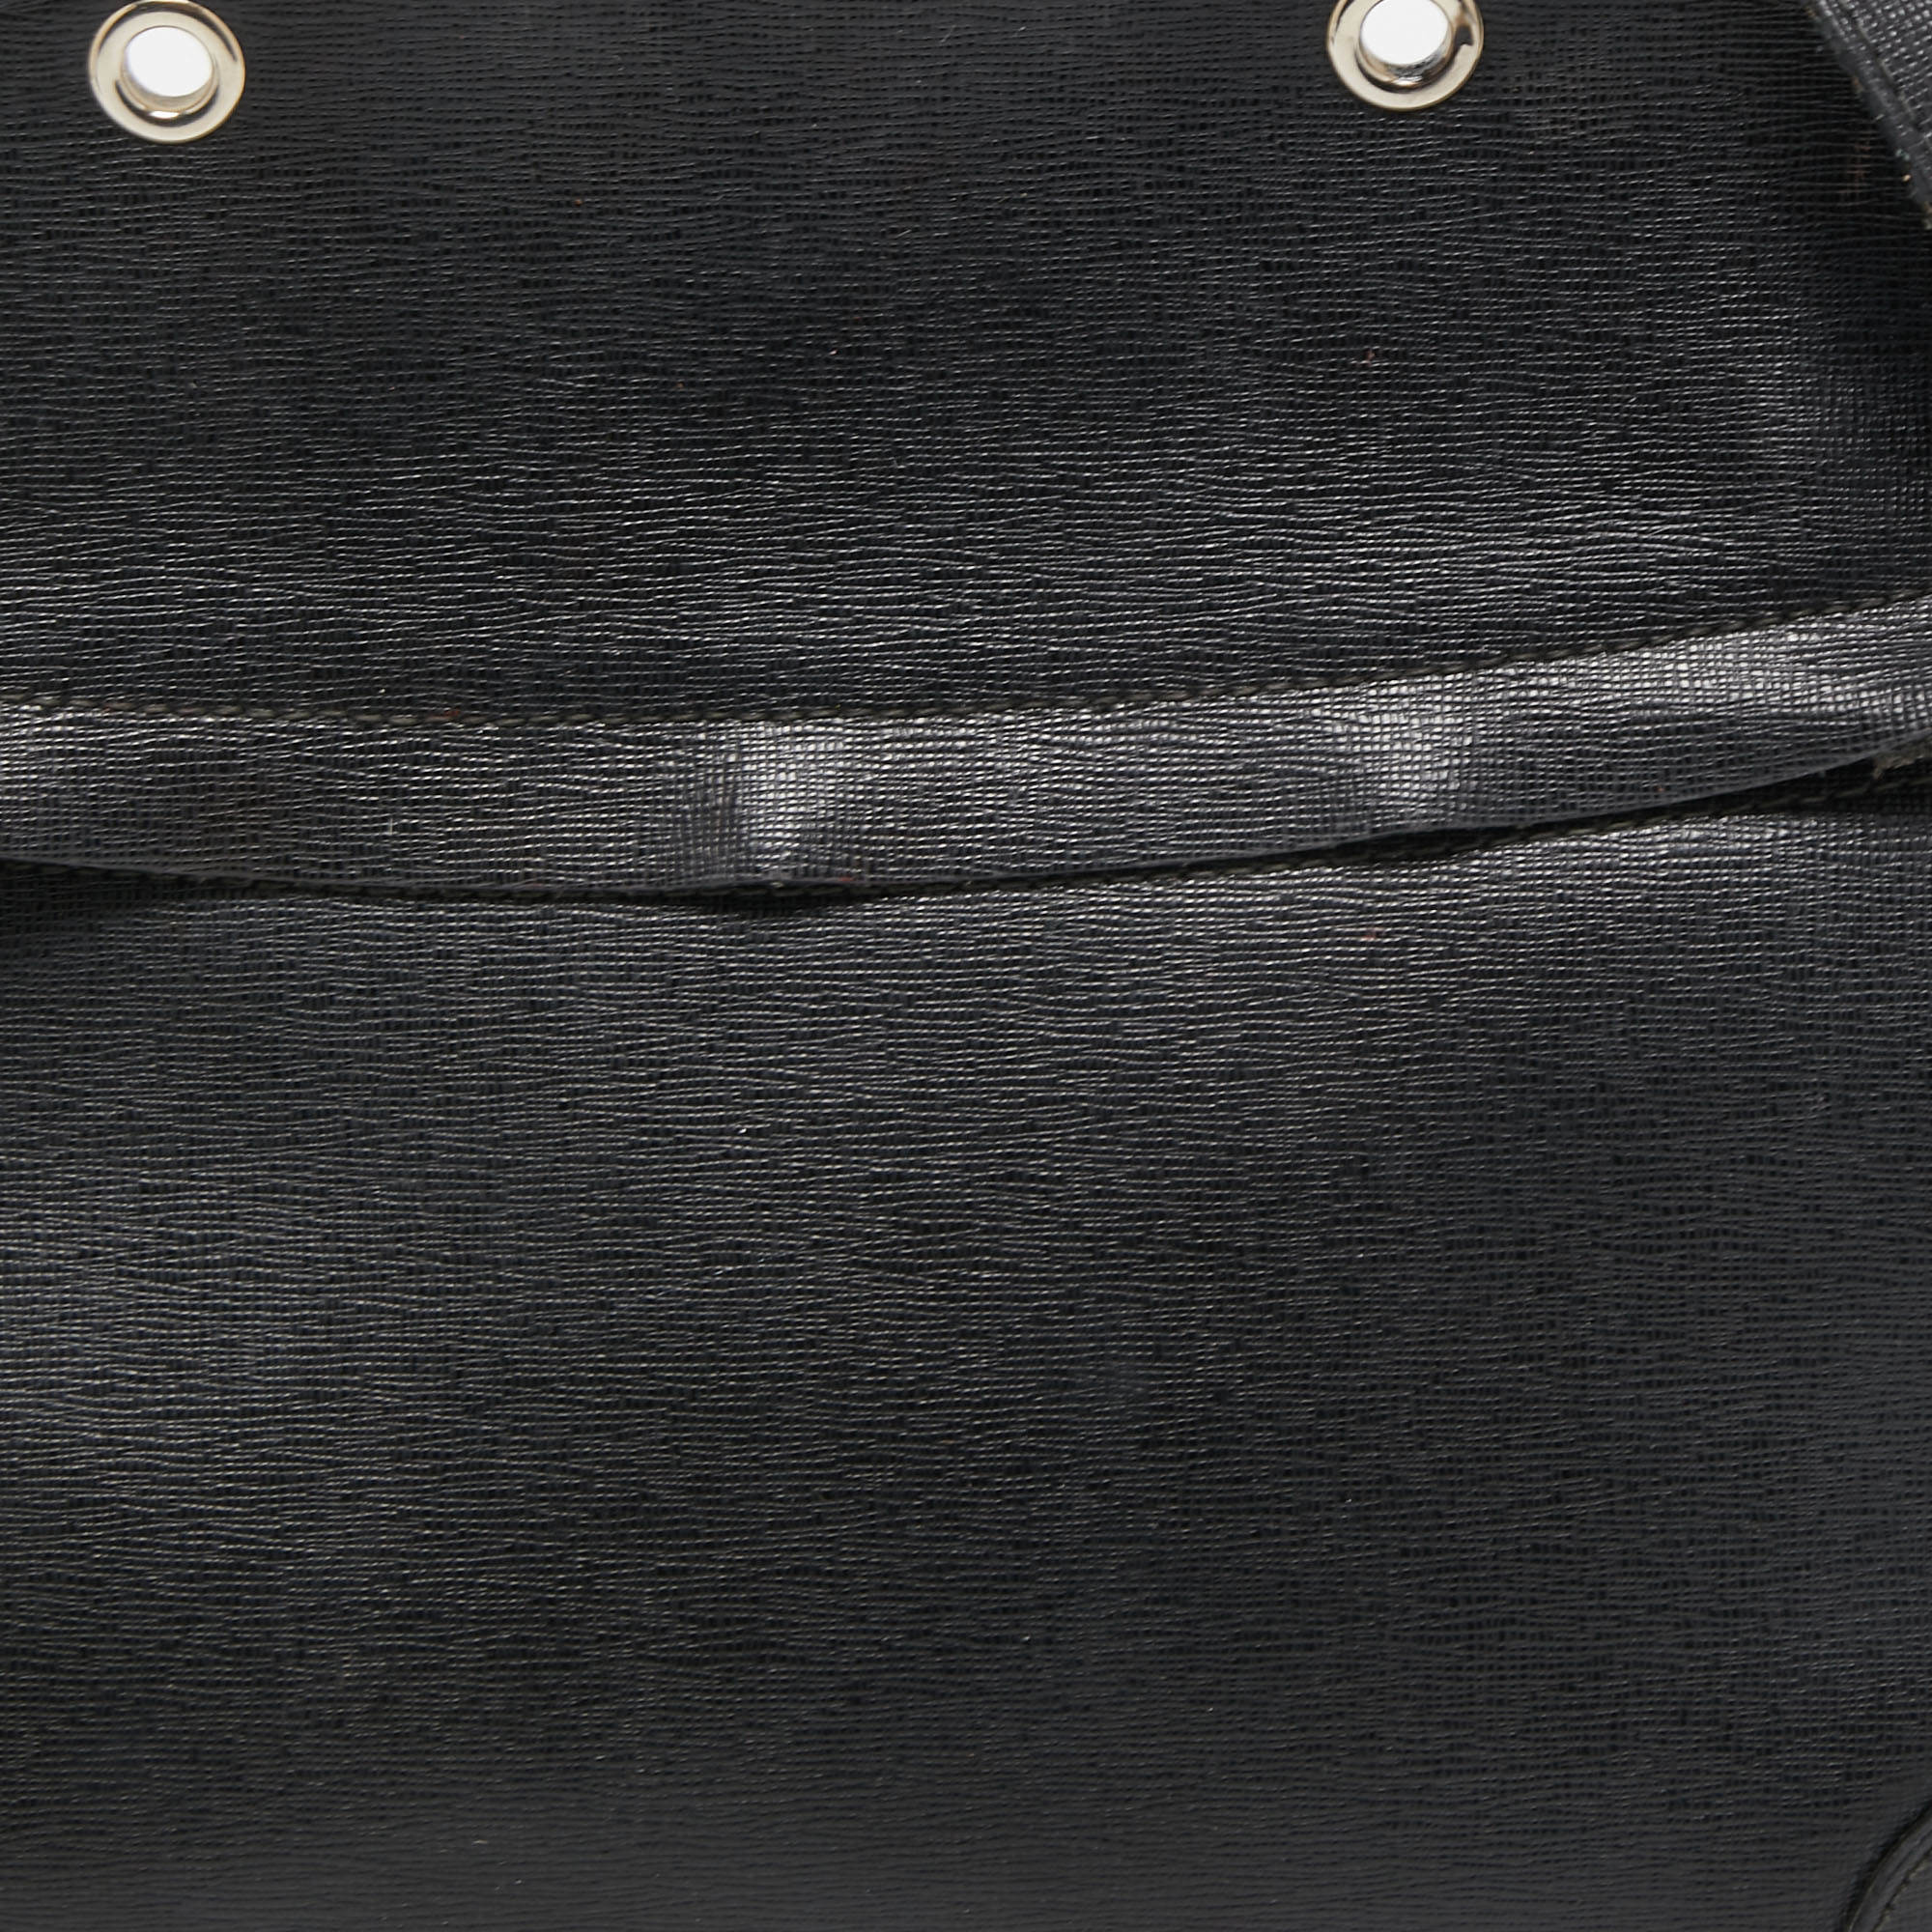 Furla Black Leather Piper Satchel